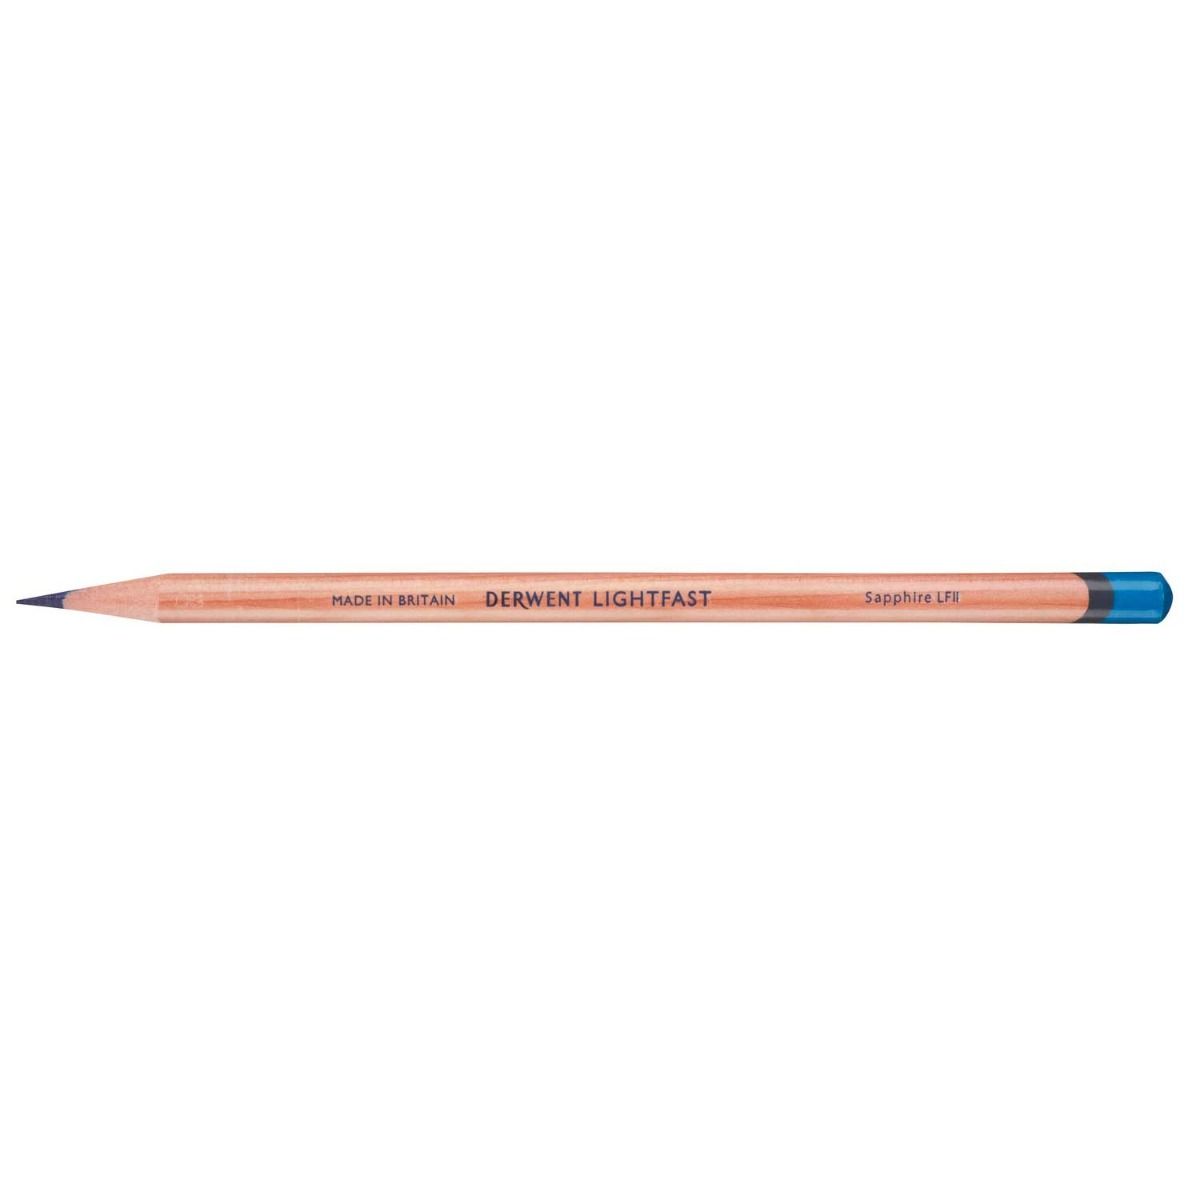 Derwent Lightfast Pencil Colour: Sapphire